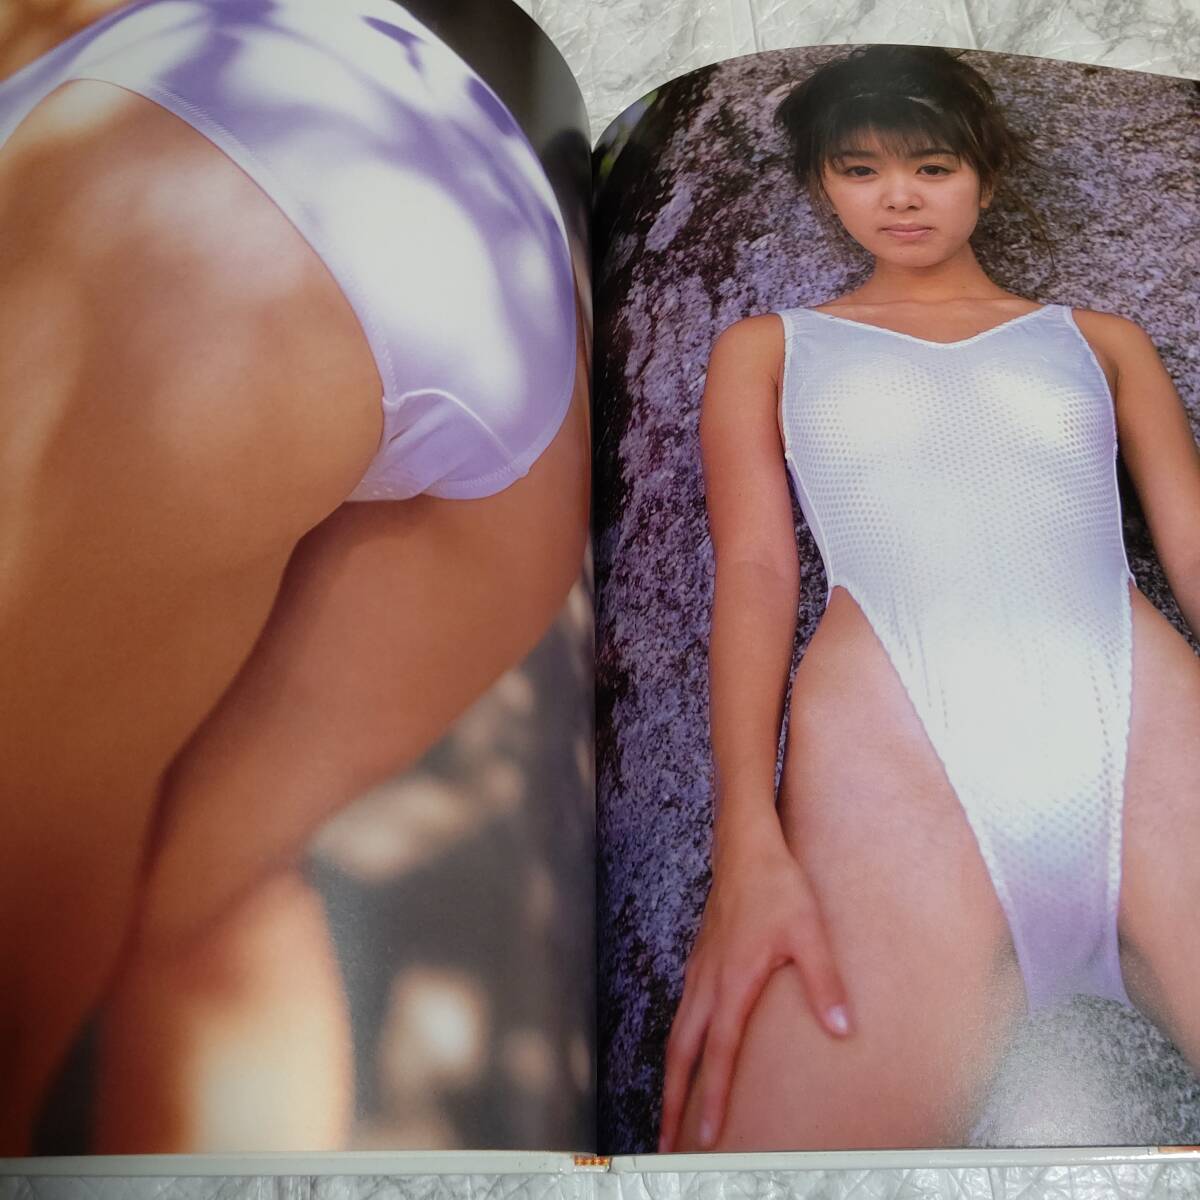  Yabe Miho фотоальбом LOOSE bikini model купальный костюм бикини нижнее белье 